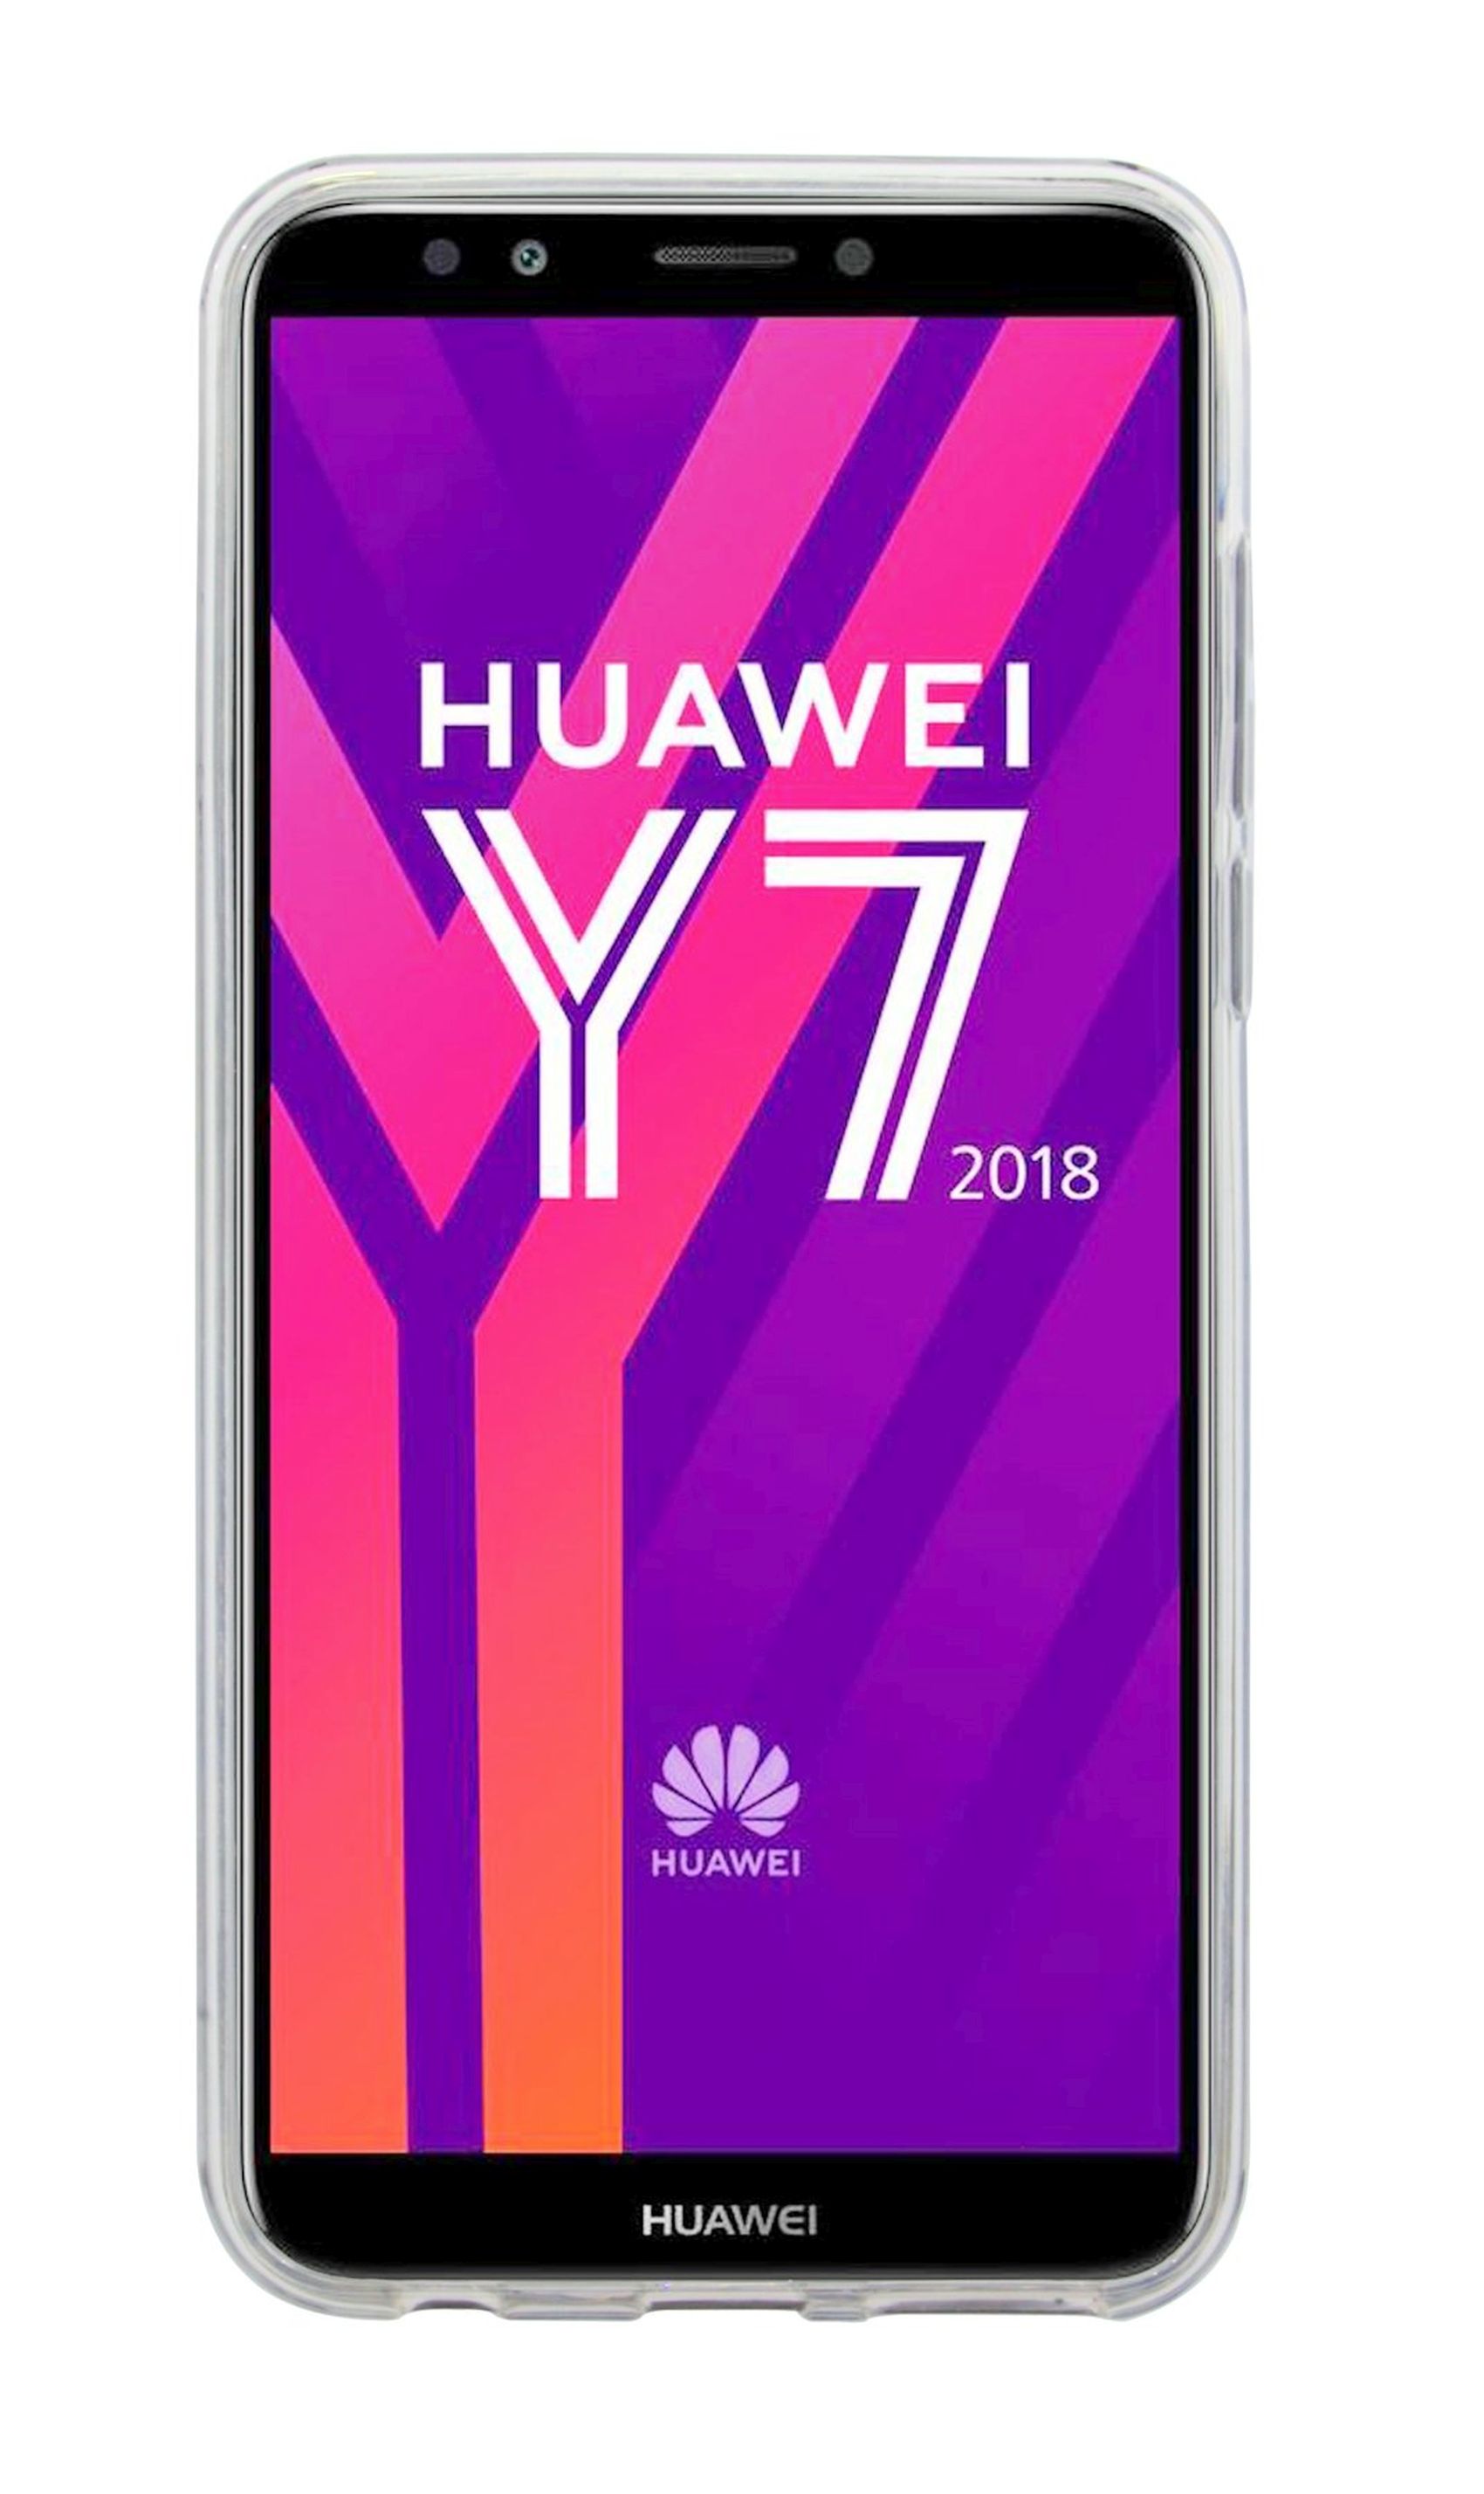 COFI S-Line Cover, Bumper, Y7 Huawei, Transparent 2018